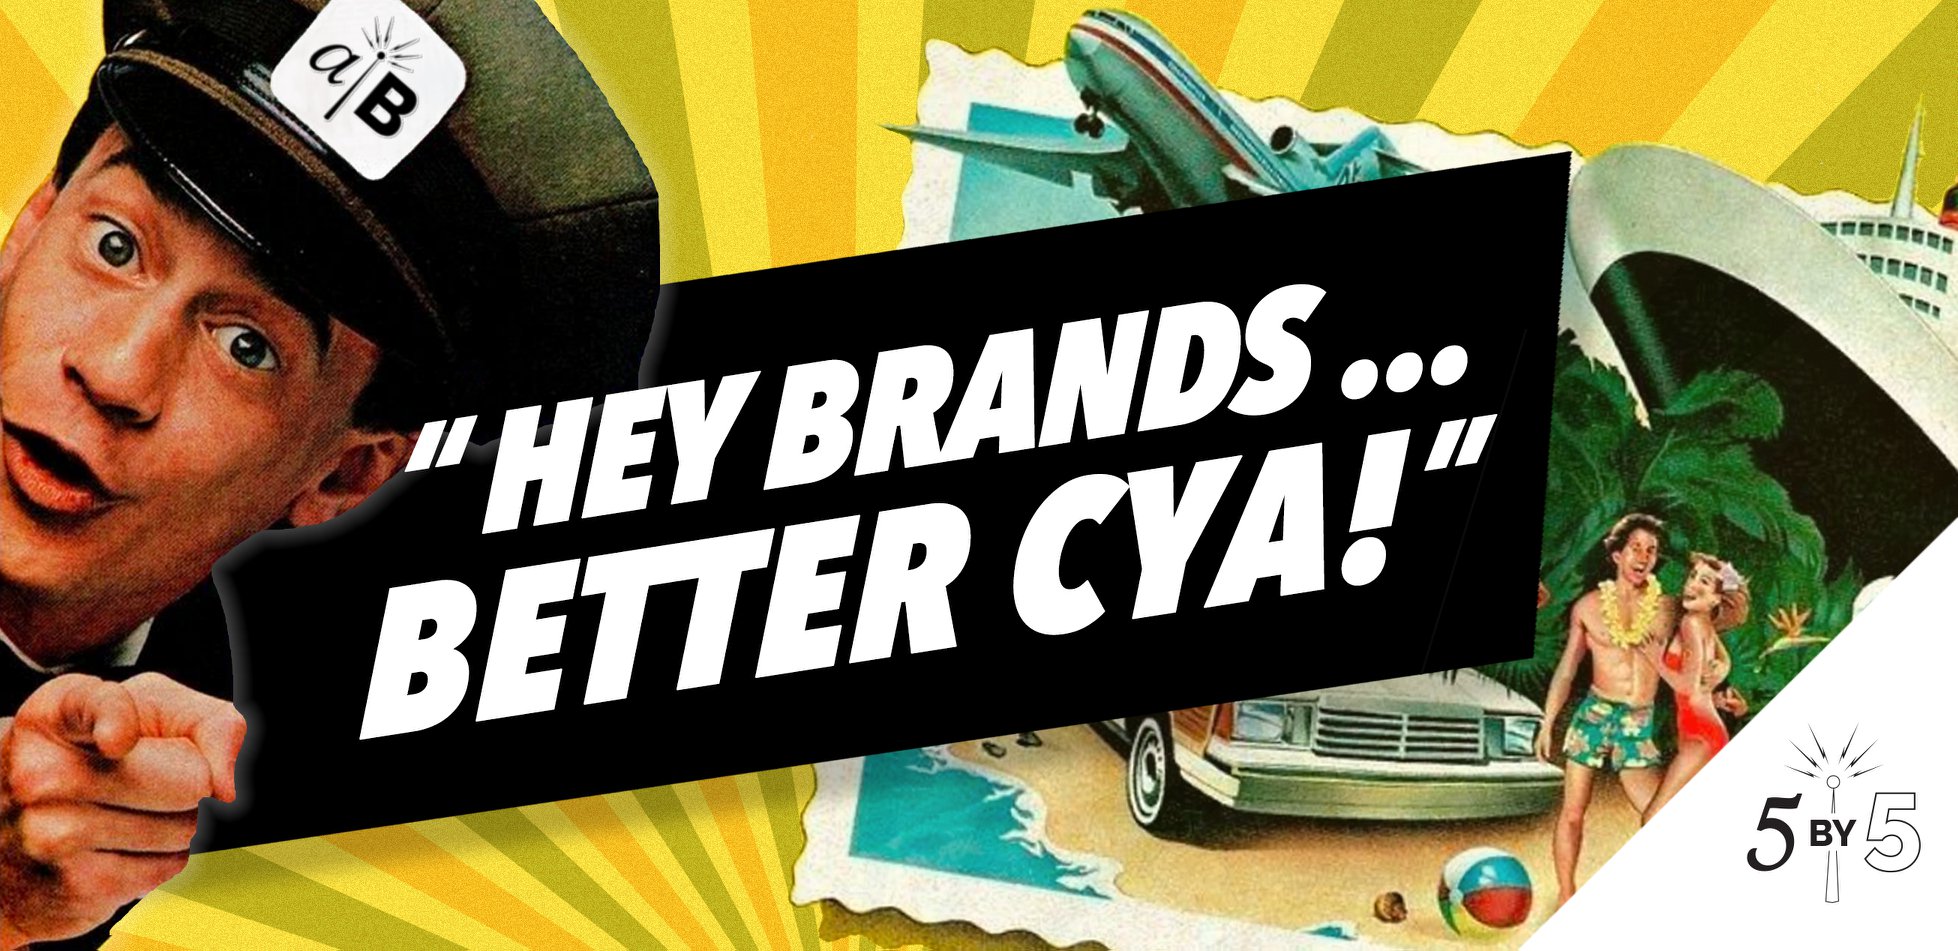 vintage poster 'hey brands...better CYA!'